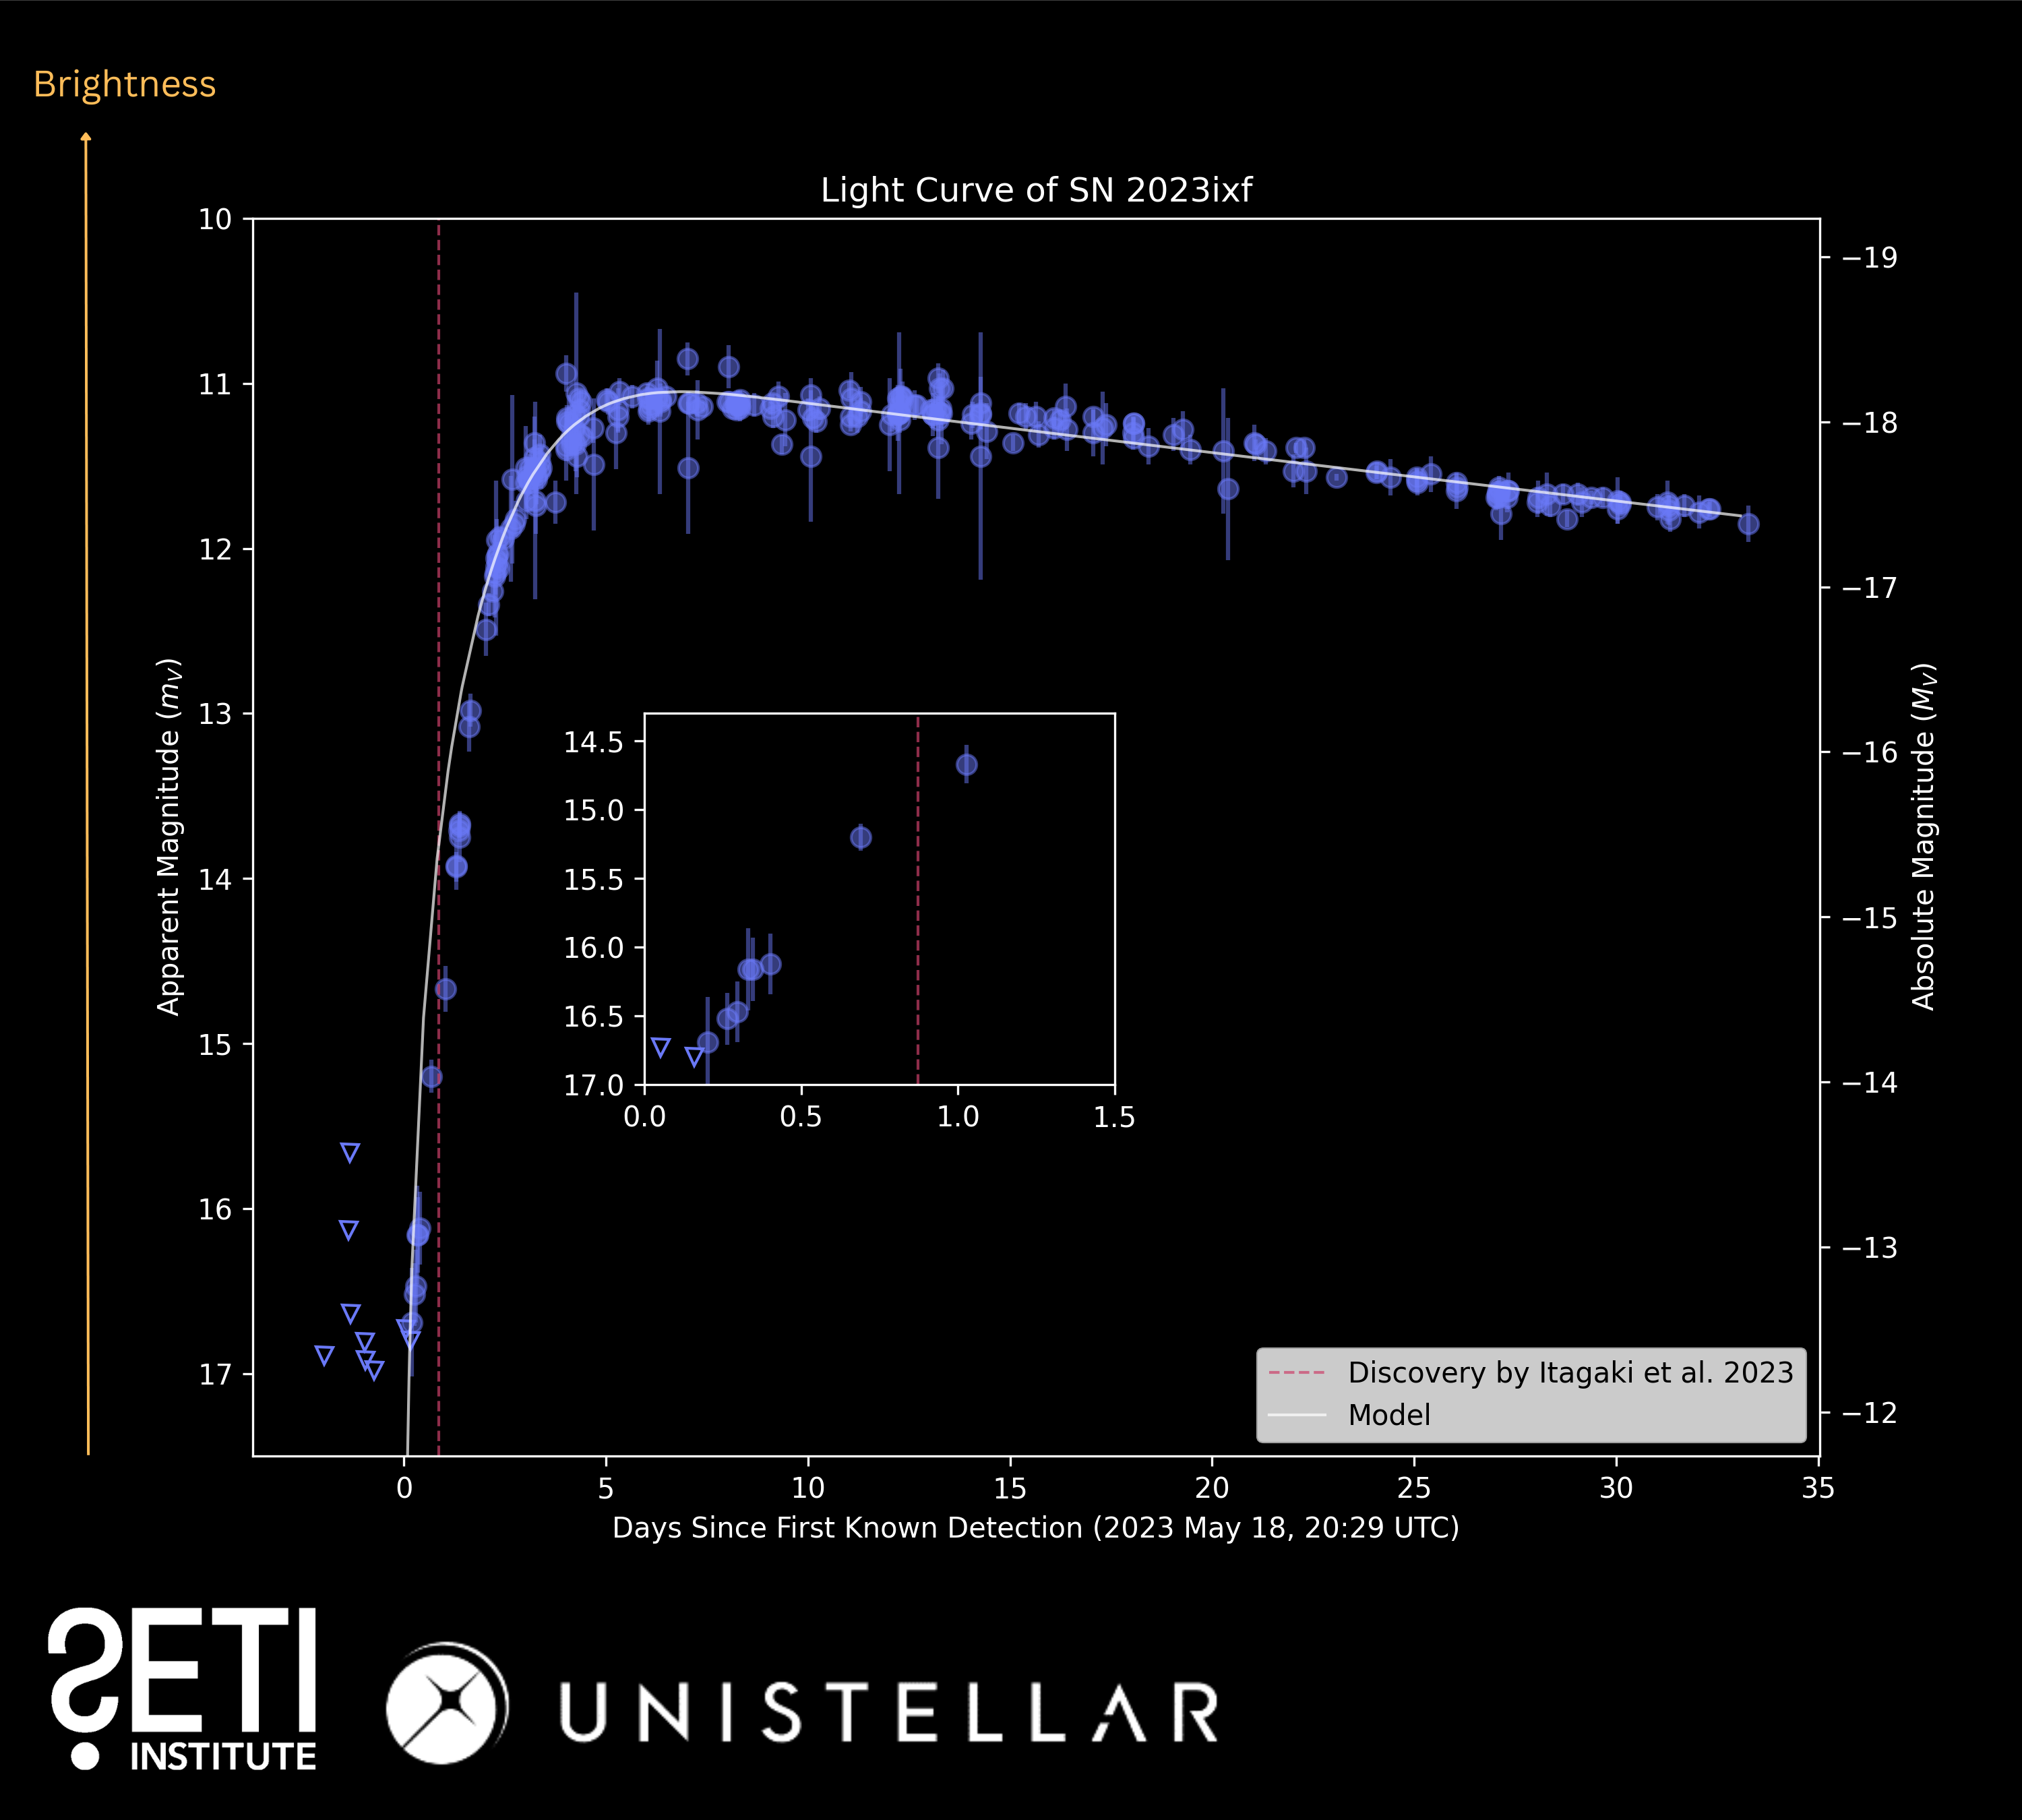 light curve of supernova SN 2023ixf using data taken by SETI Institute / Unistellar citizen astronomers